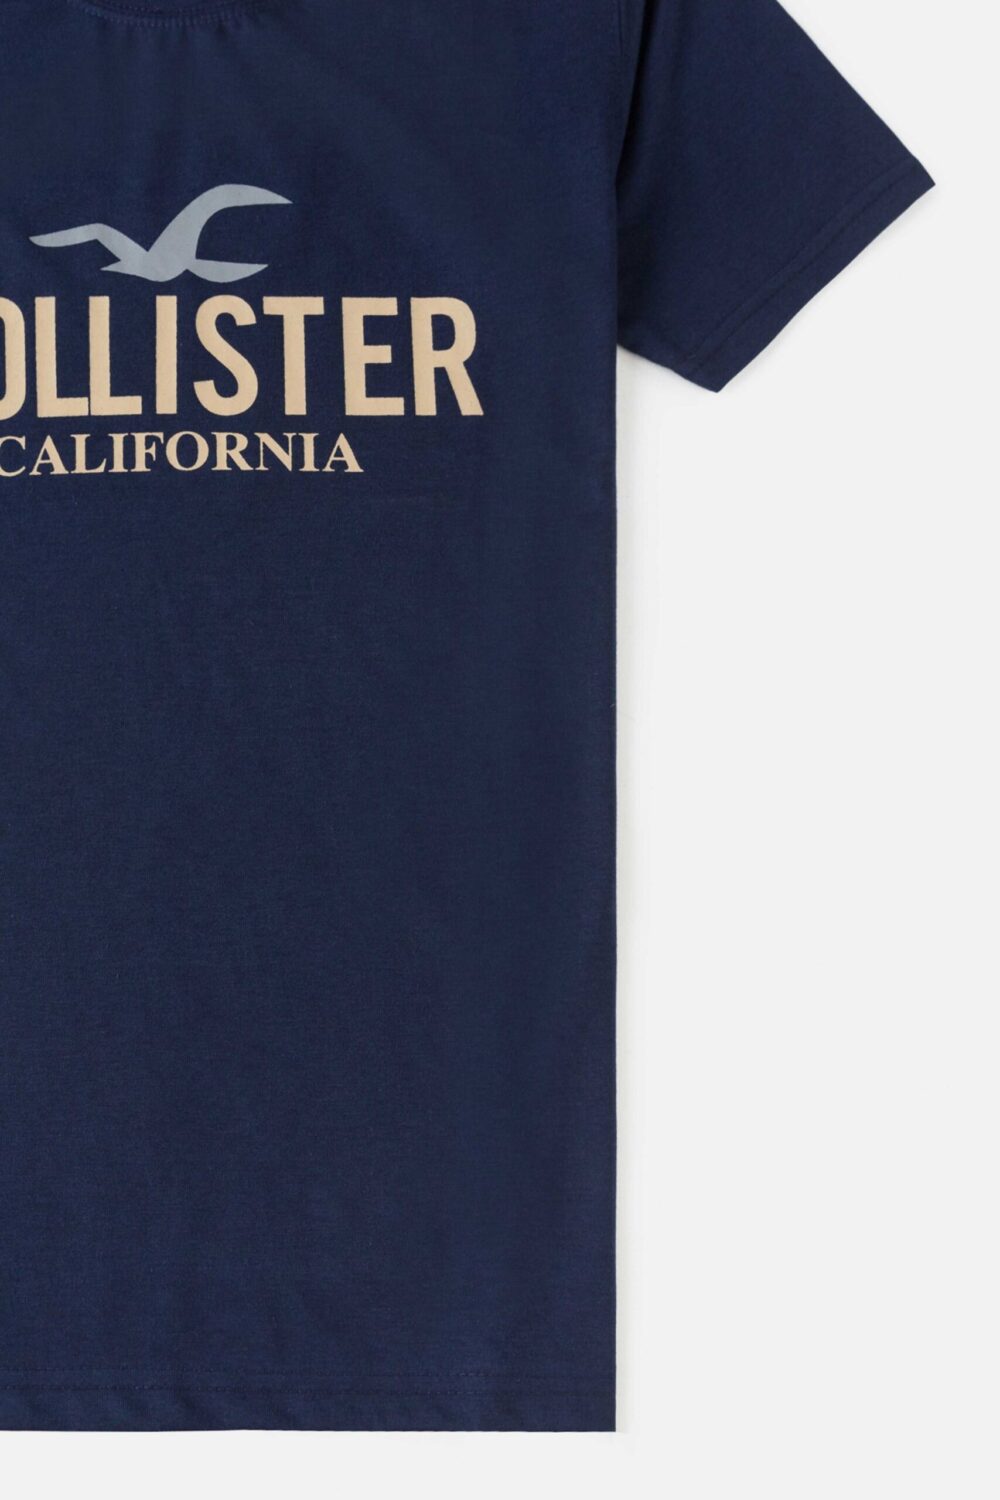 Holister Cotton Print T Shirt – Navy Blue